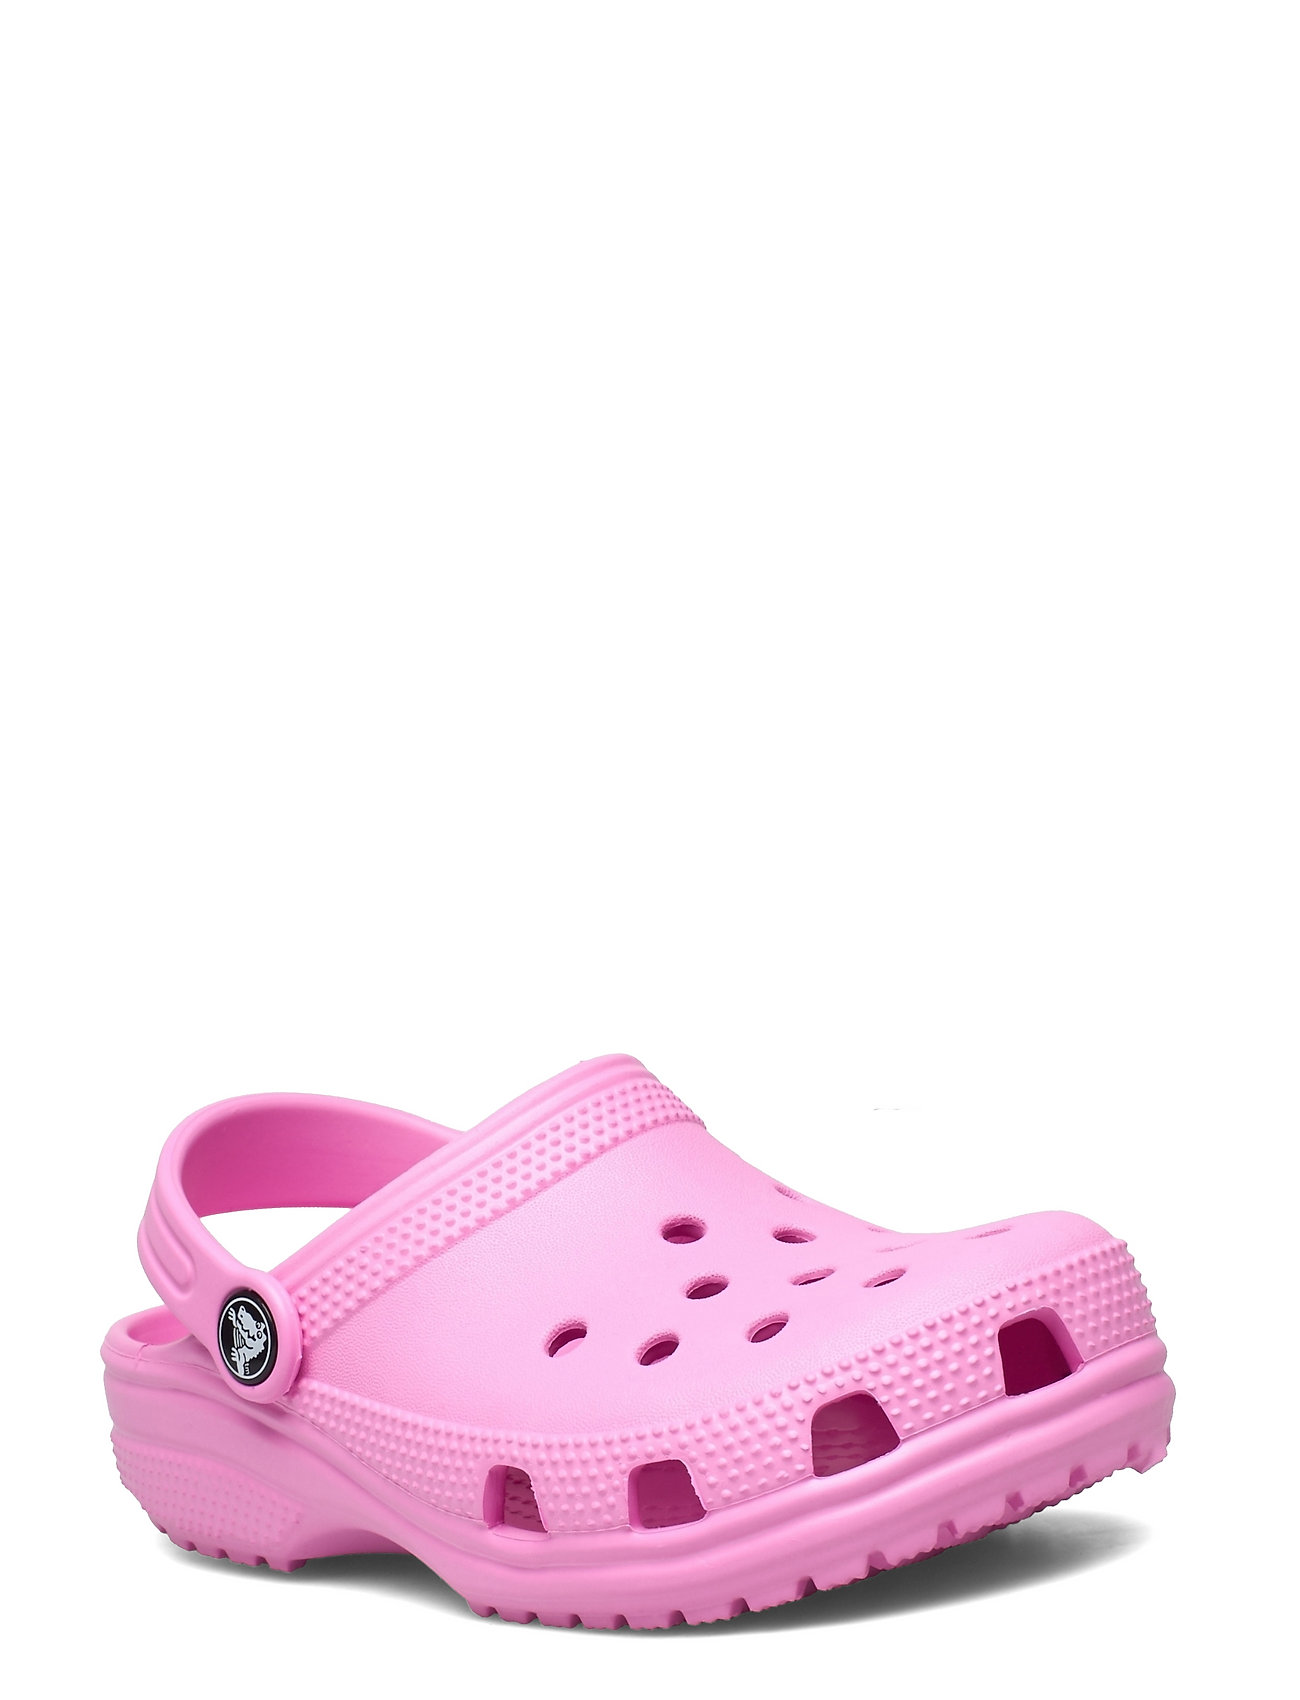 Crocs Classic Clog K (Taffy Pink), (23.62 €) | Large selection of ...